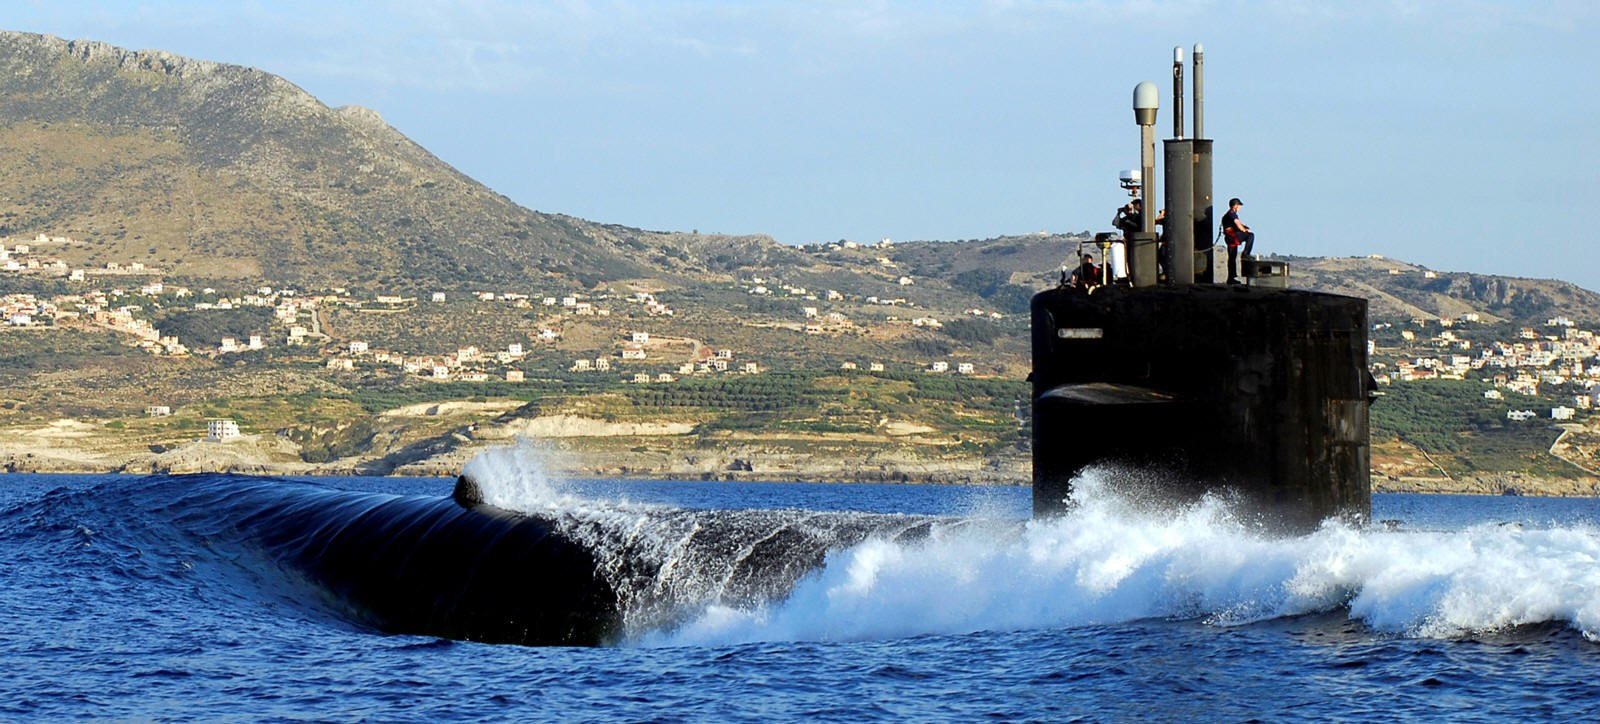 ssn-714 uss norfolk los angeles class attack submarine us navy newport news shipbuilding